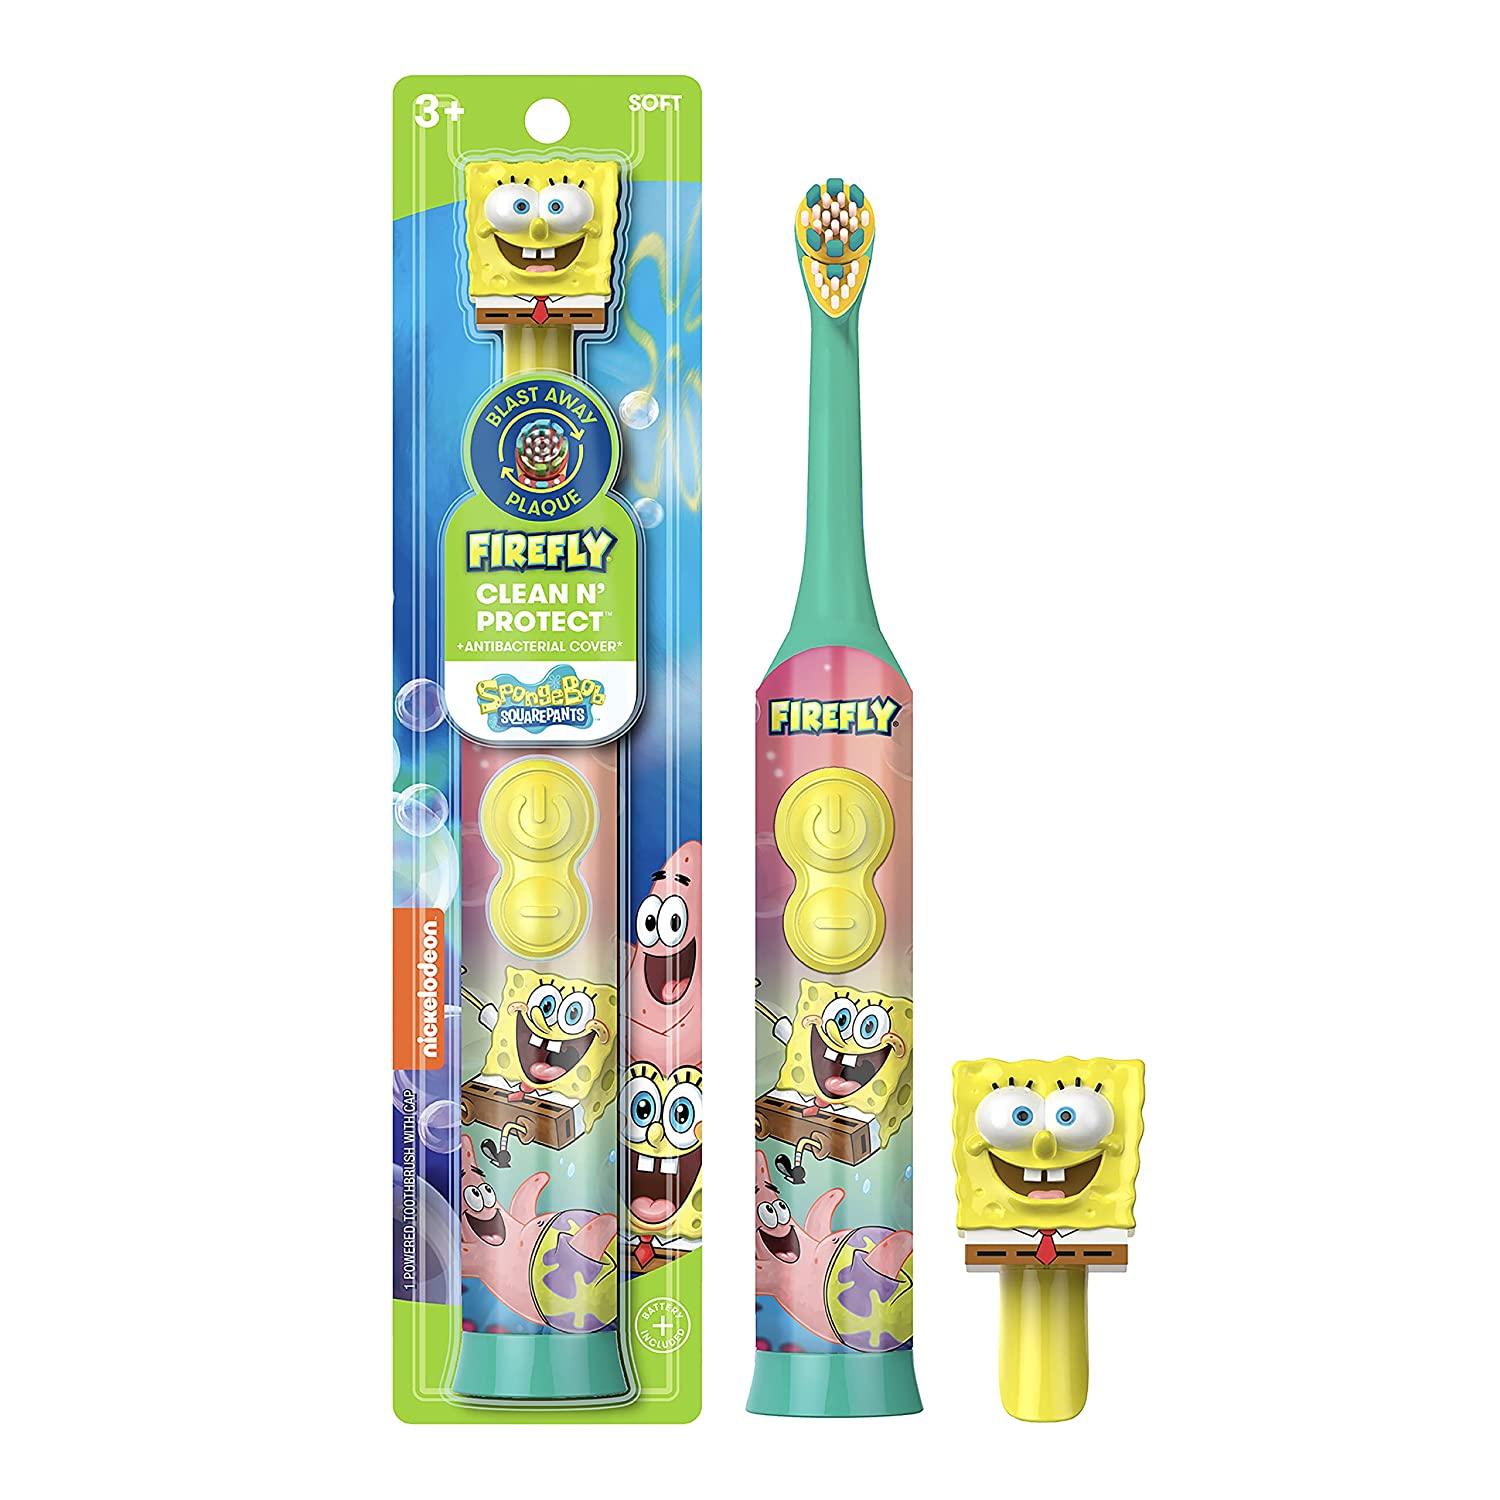 Firefly Clean N' Protect Spongebob Power Toothbrush